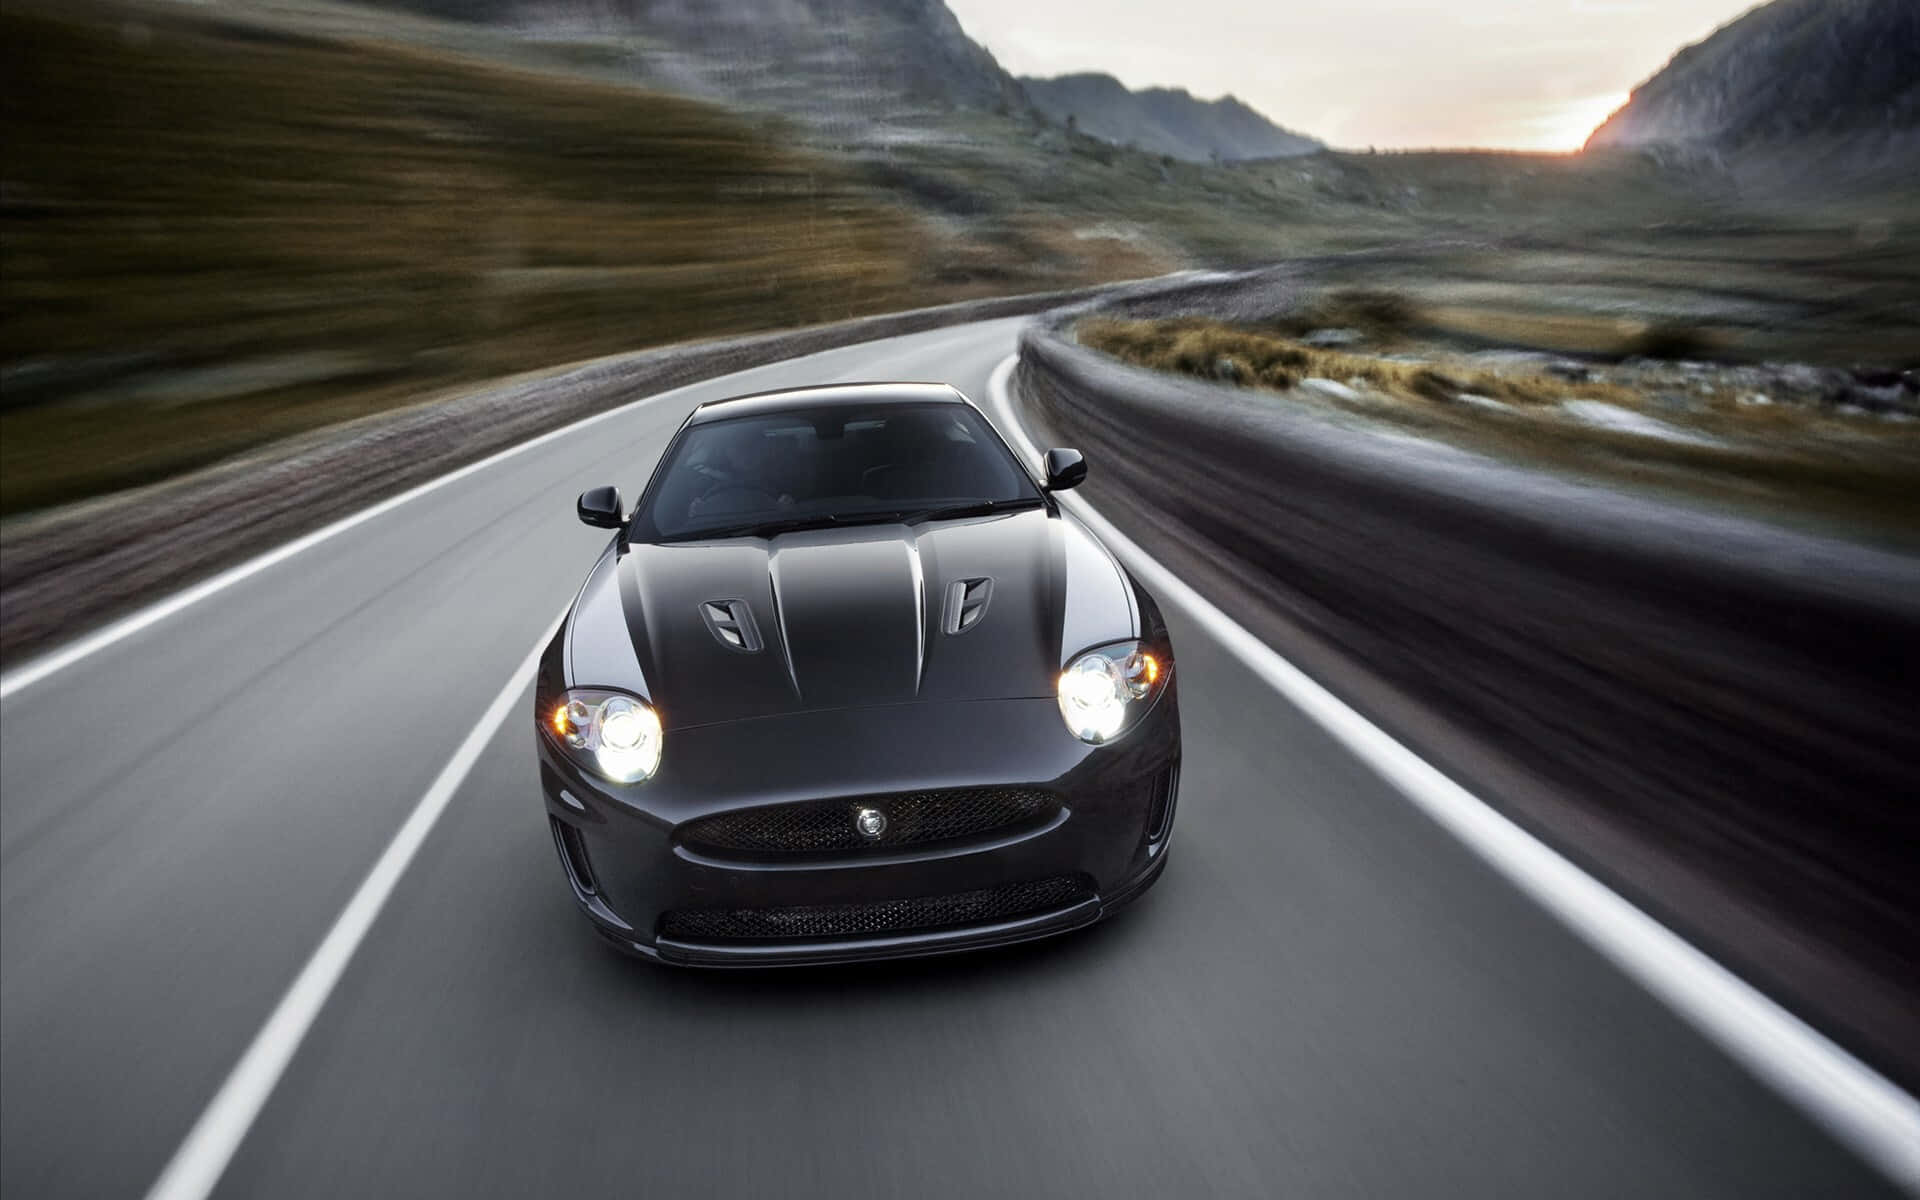 Sleek and Powerful - The Jaguar XKR Wallpaper